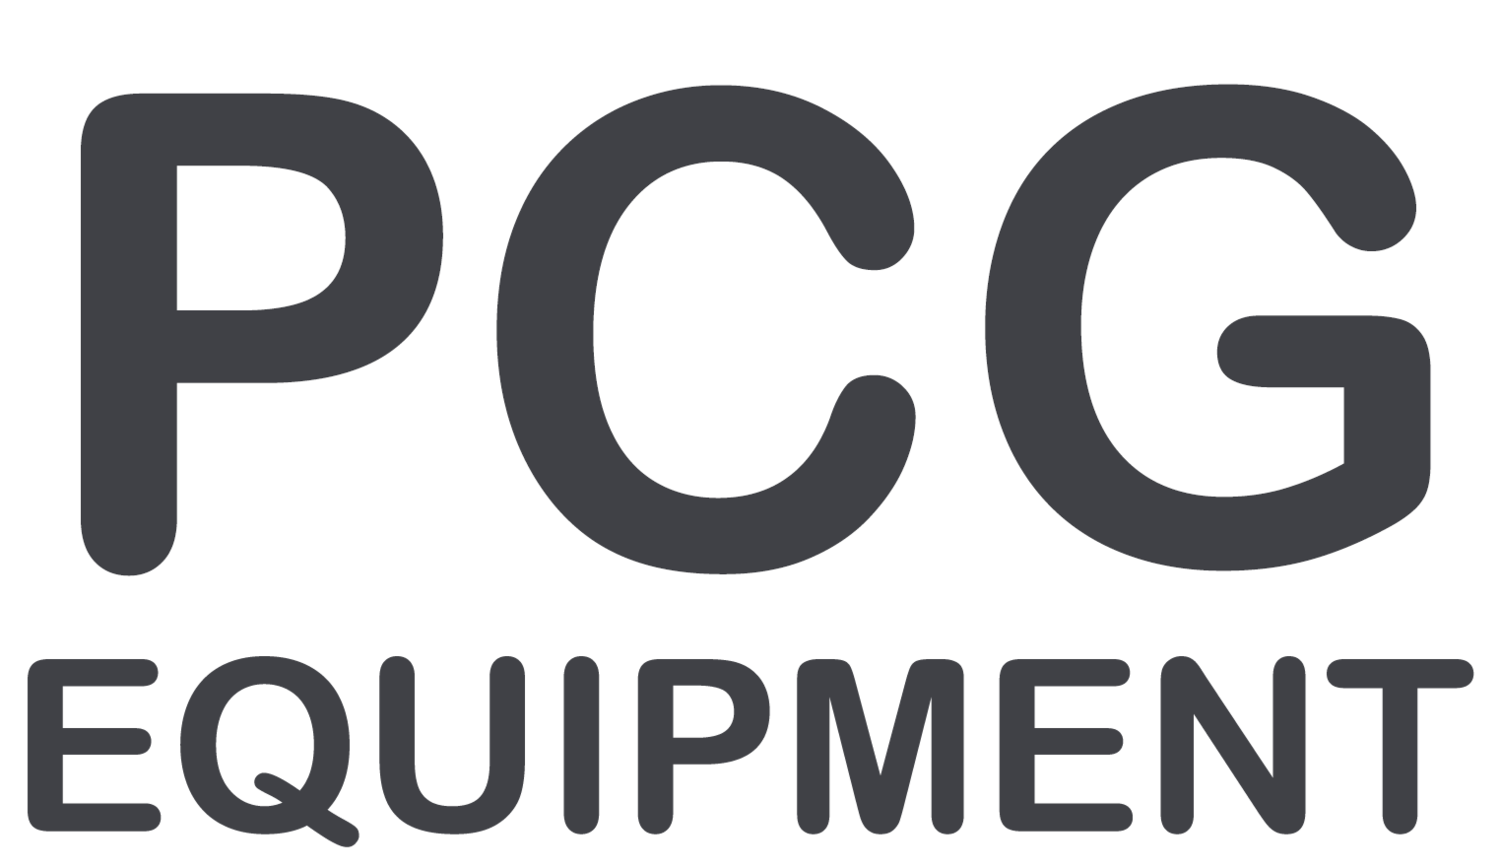 PCG Equipment